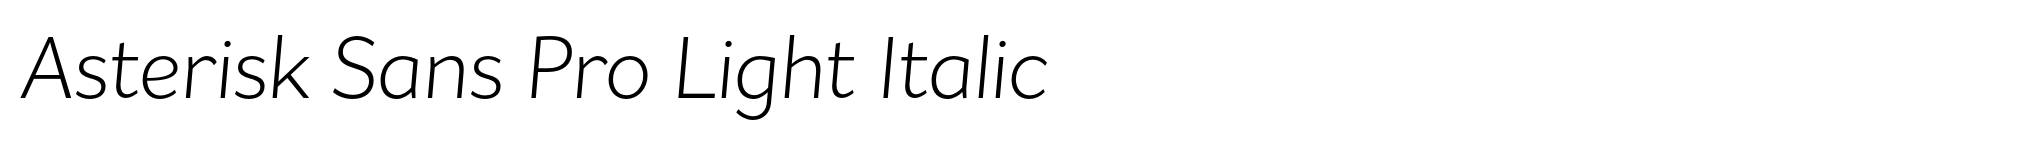 Asterisk Sans Pro Light Italic image